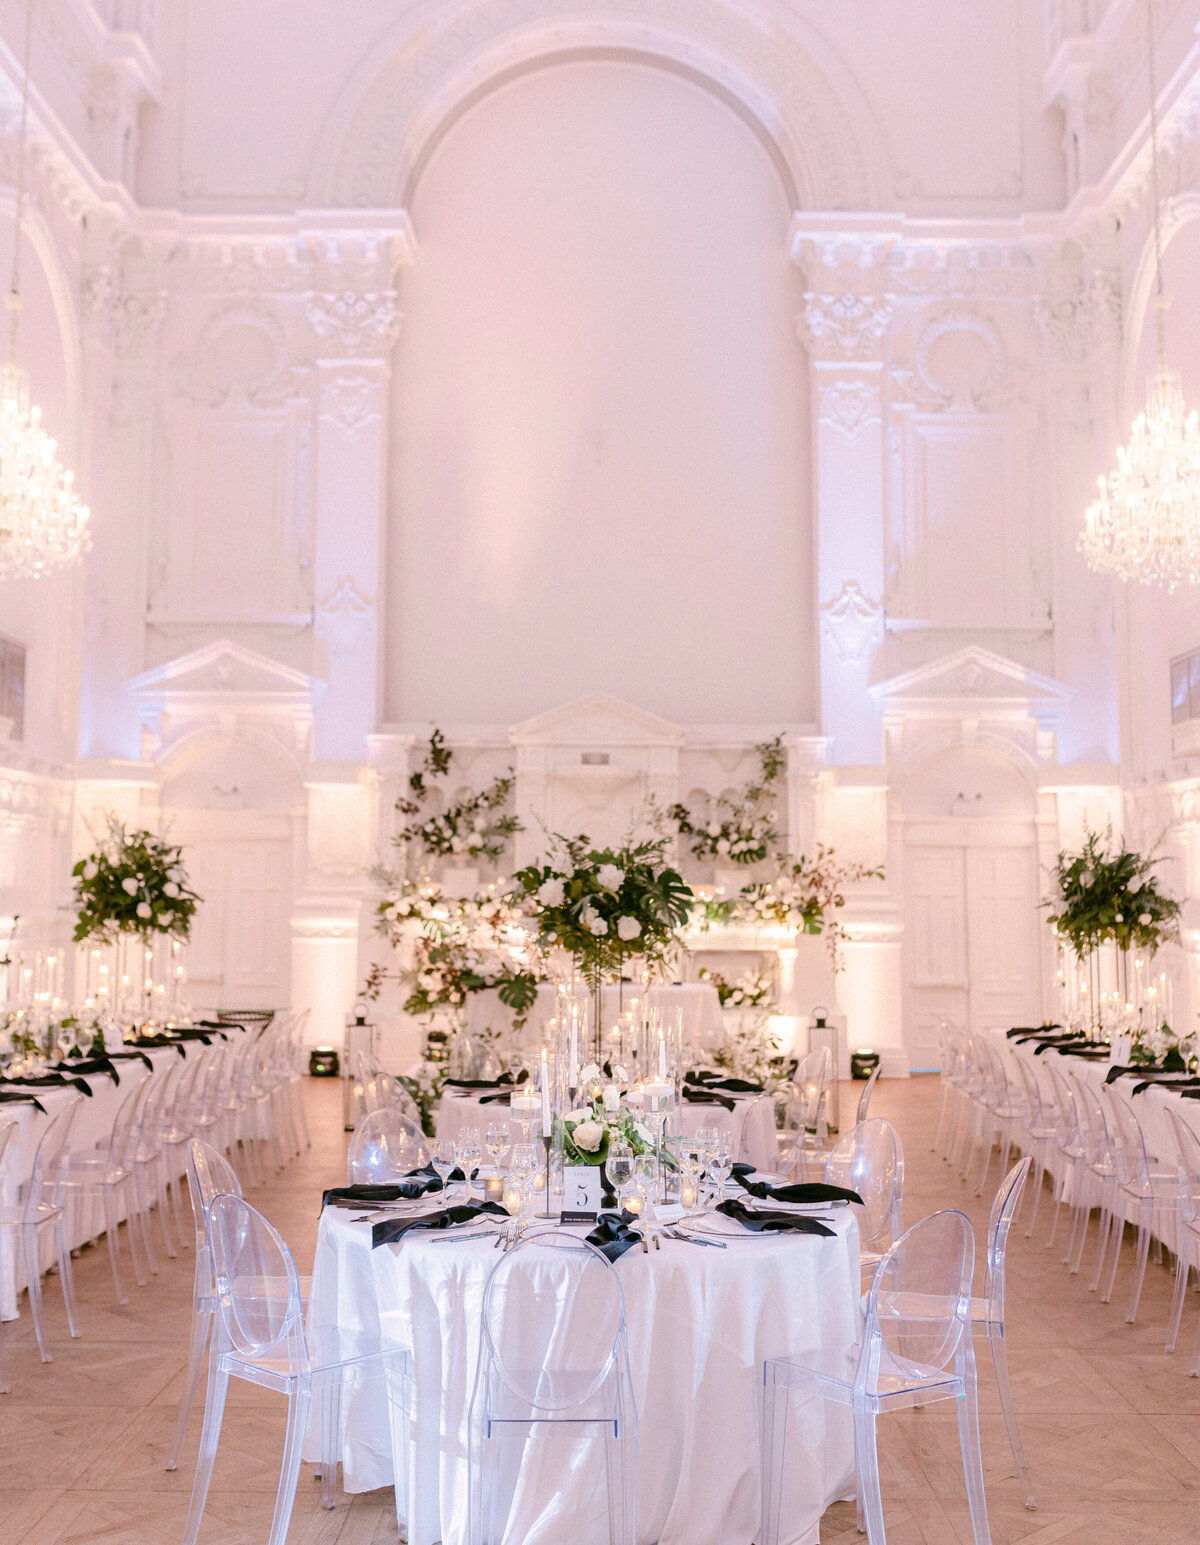 Atelier-Carmel-Wedding-Florist-GALLERY-Spaces-12